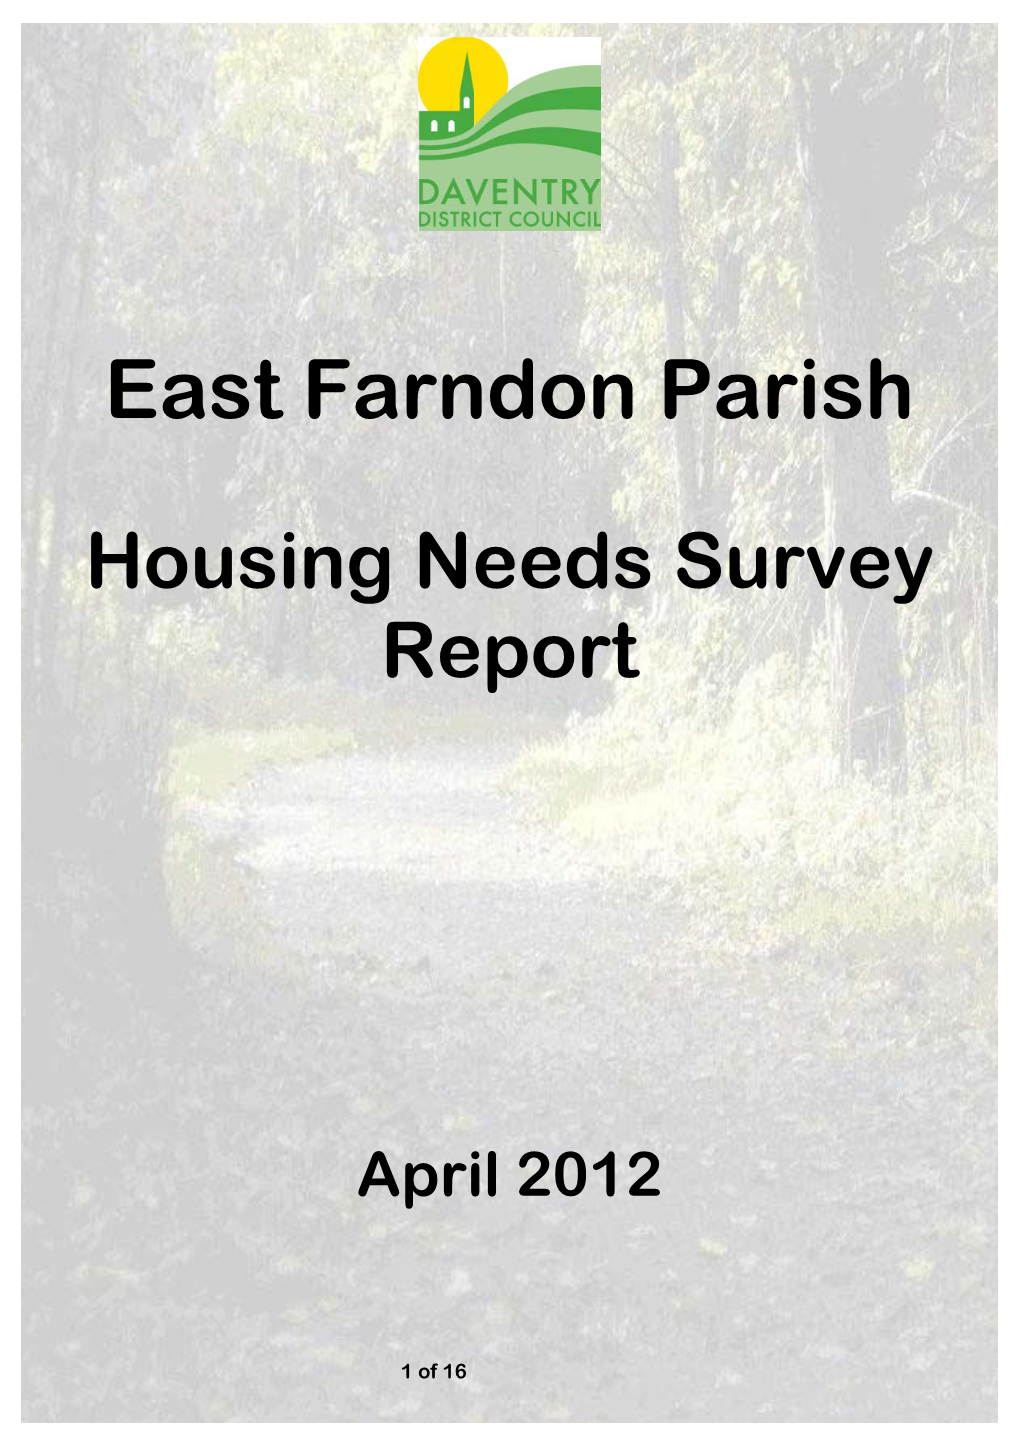 East Farndon Parish